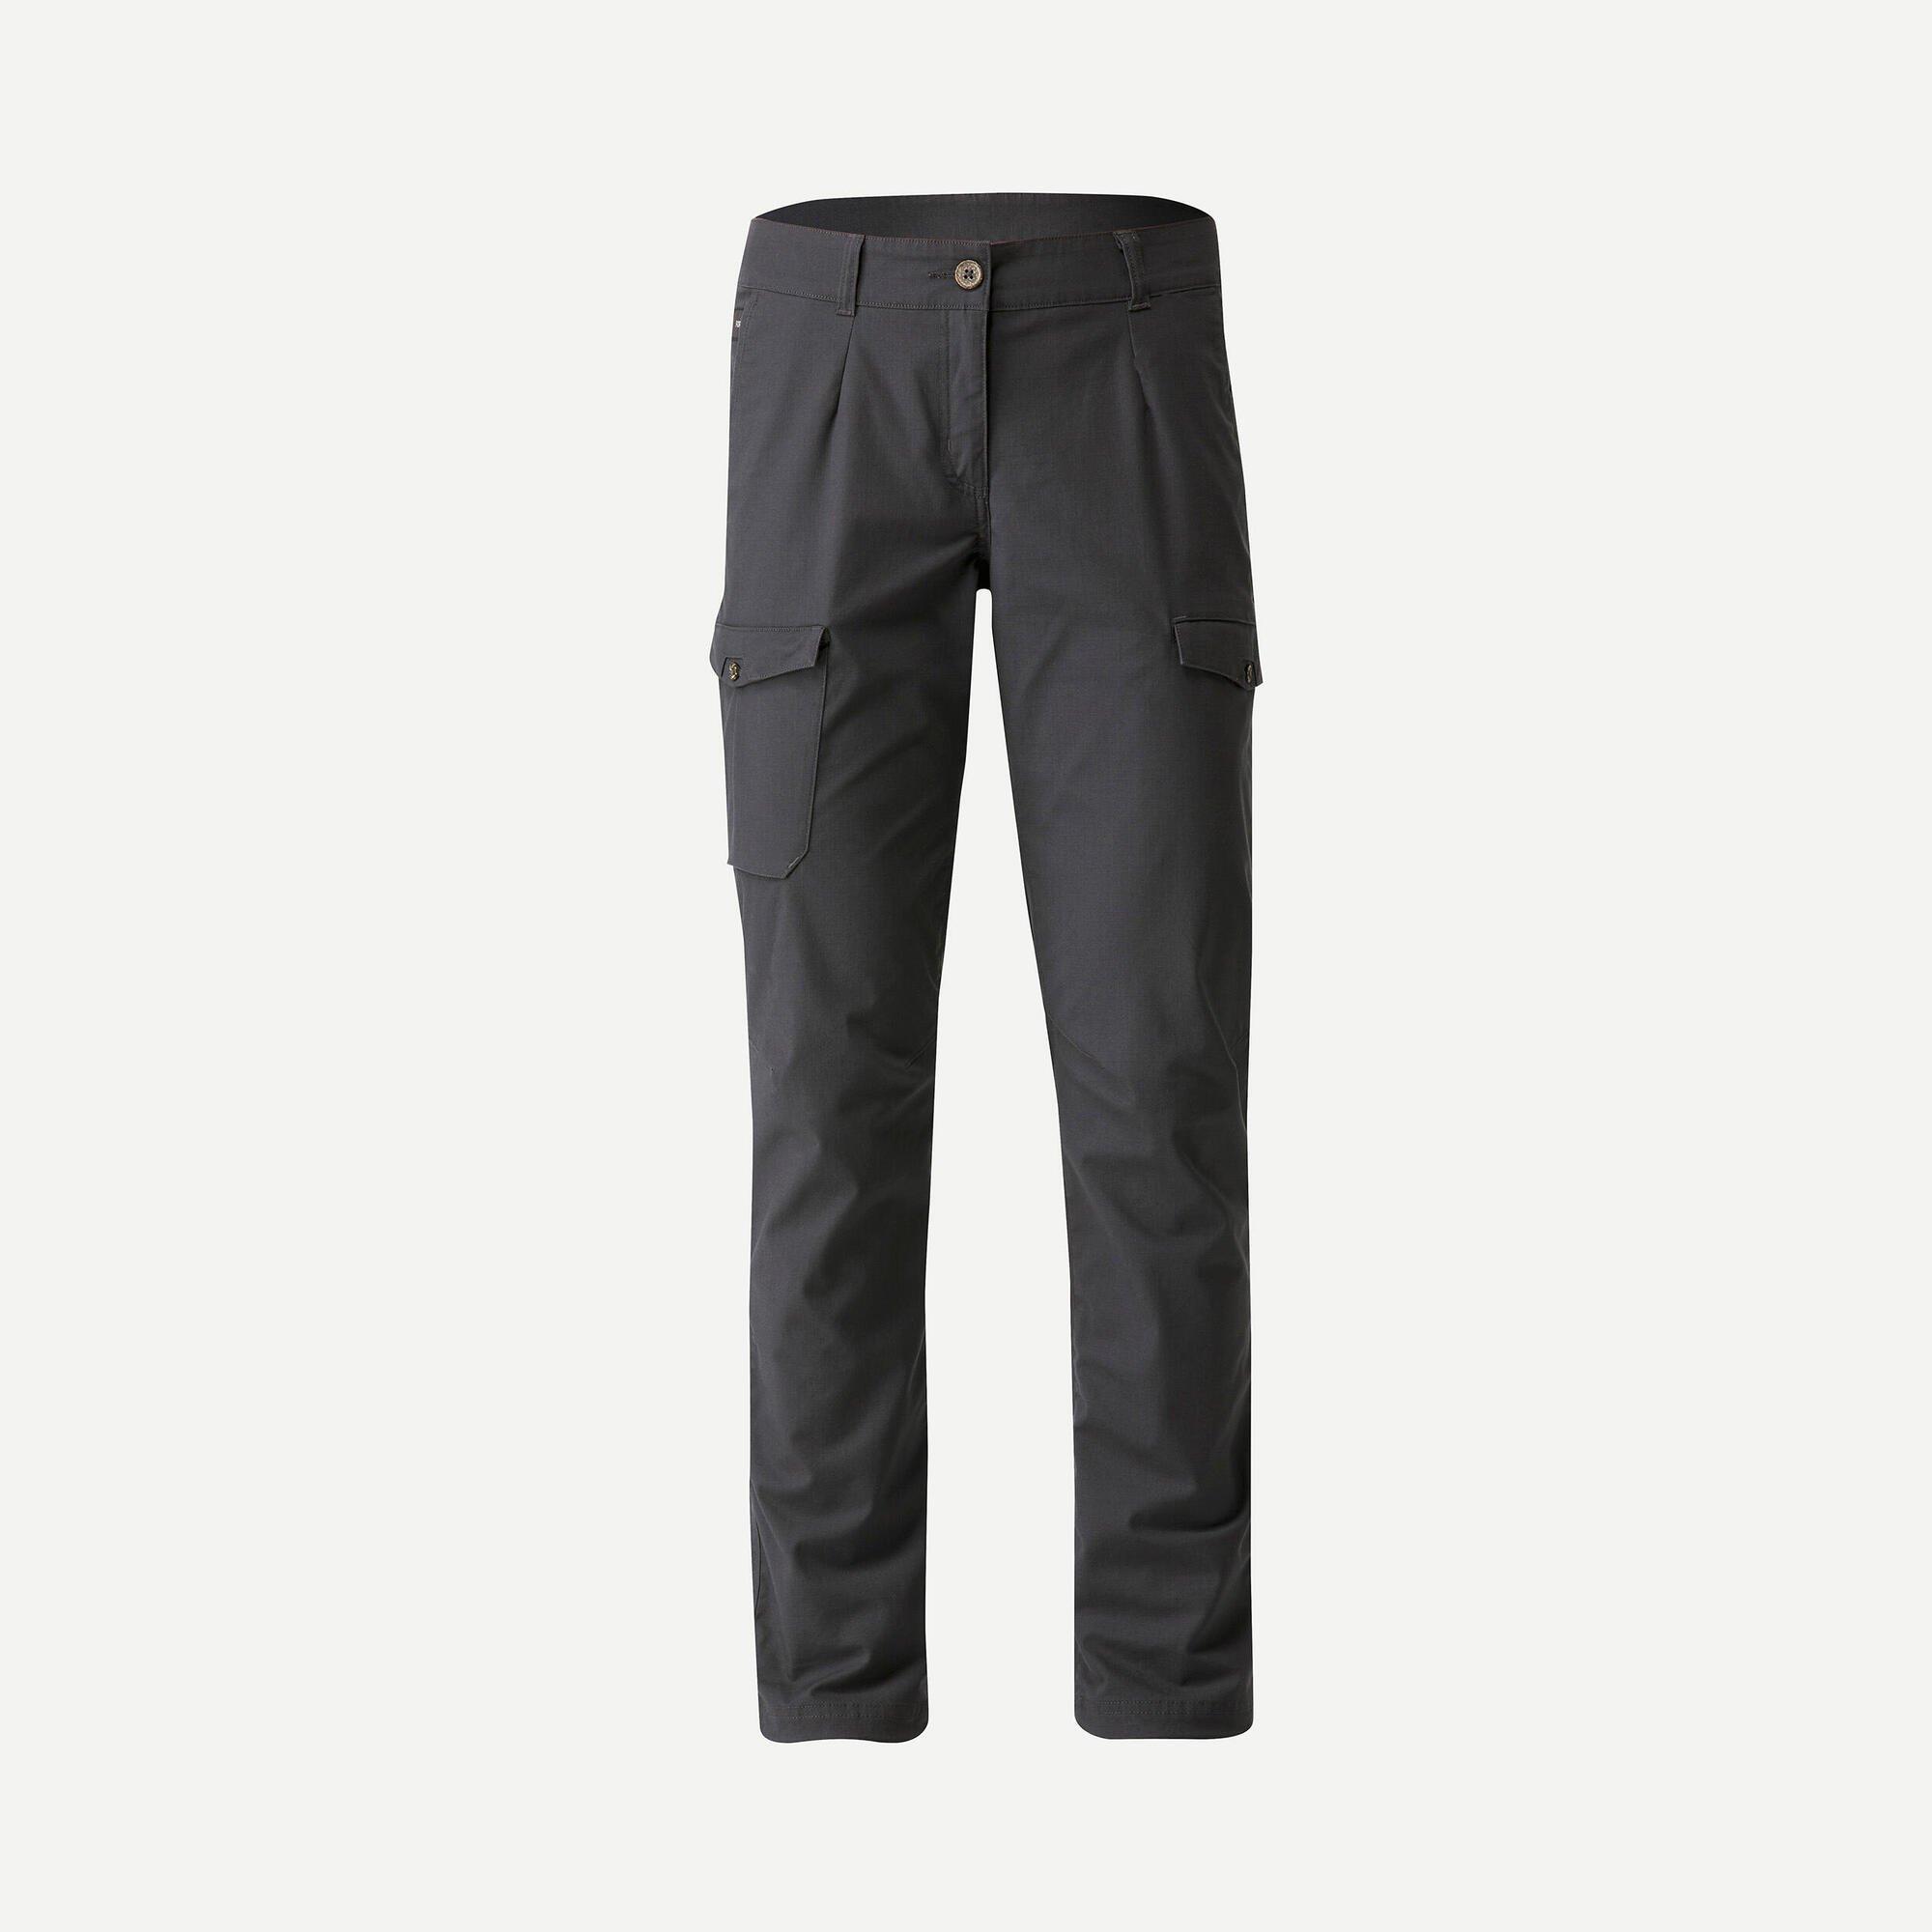 Decathlon Trekking Pants Size UK 10 FR 40 Dark Grey | Pants, Clothes  design, Fashion